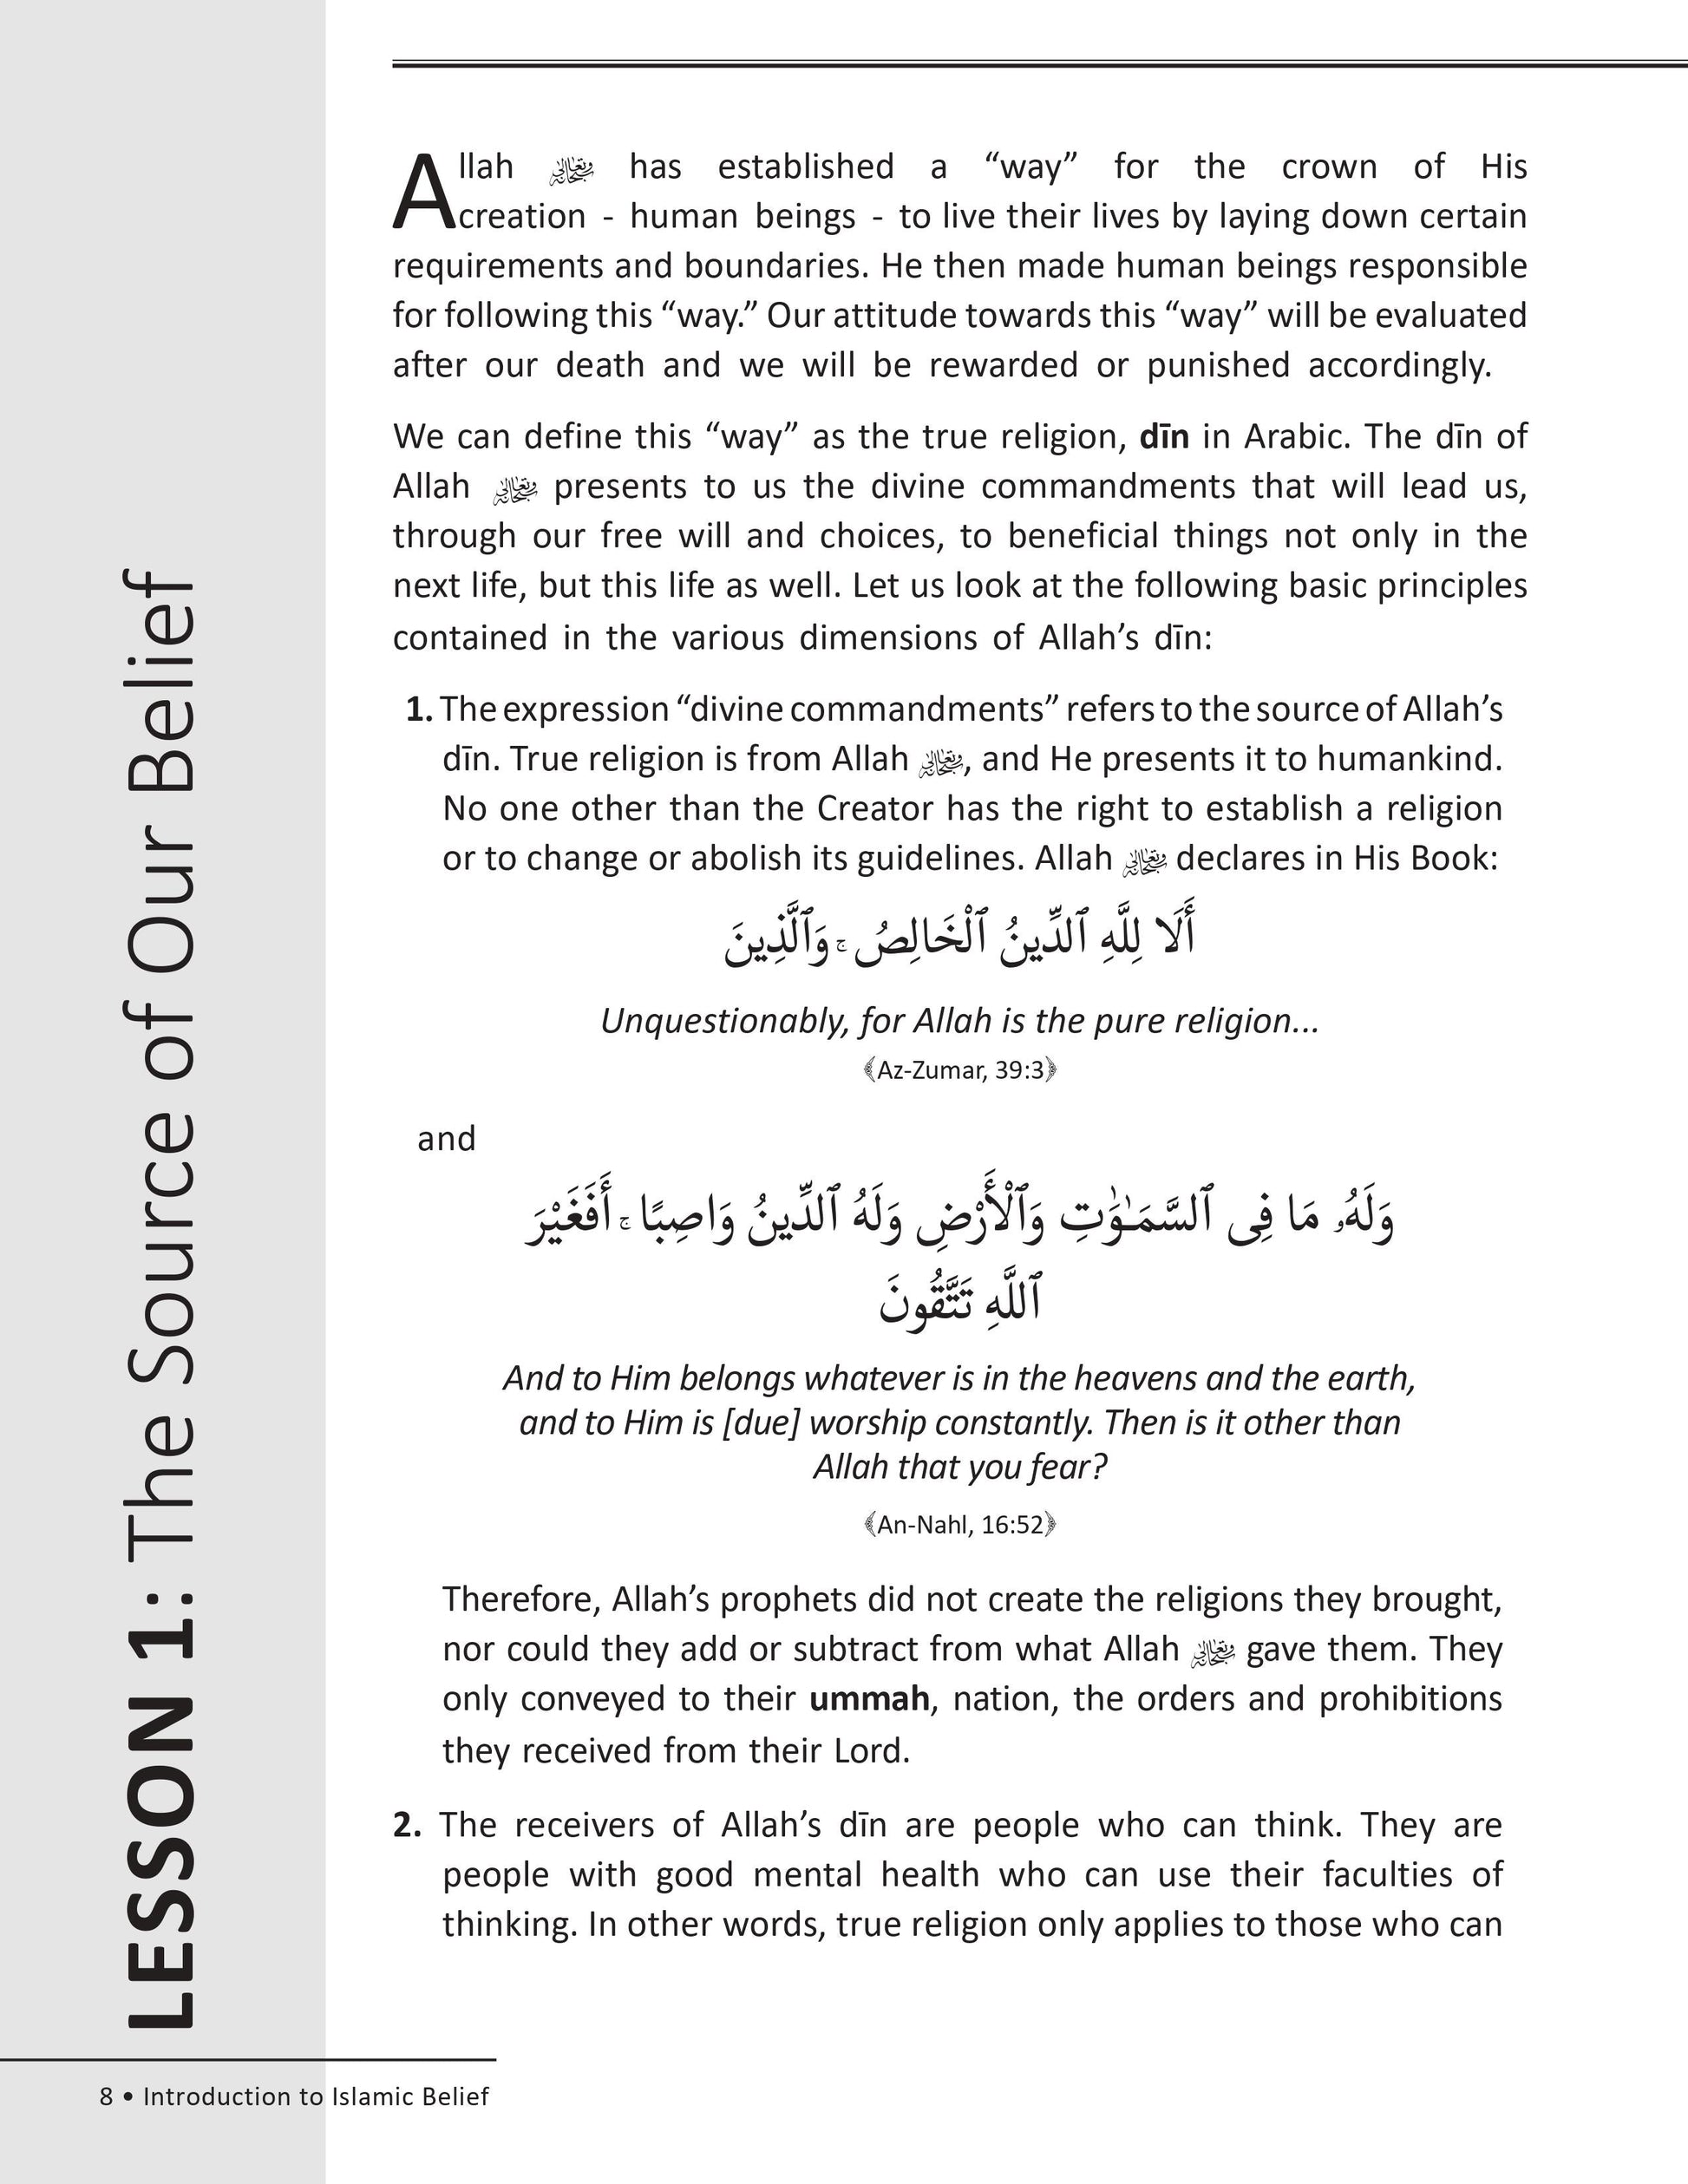 Islamic Beliefs-Al-Aqaid ul-Islamiyyah - Premium Textbook from IQRA' international Educational Foundation - Just $20! Shop now at IQRA Book Center 